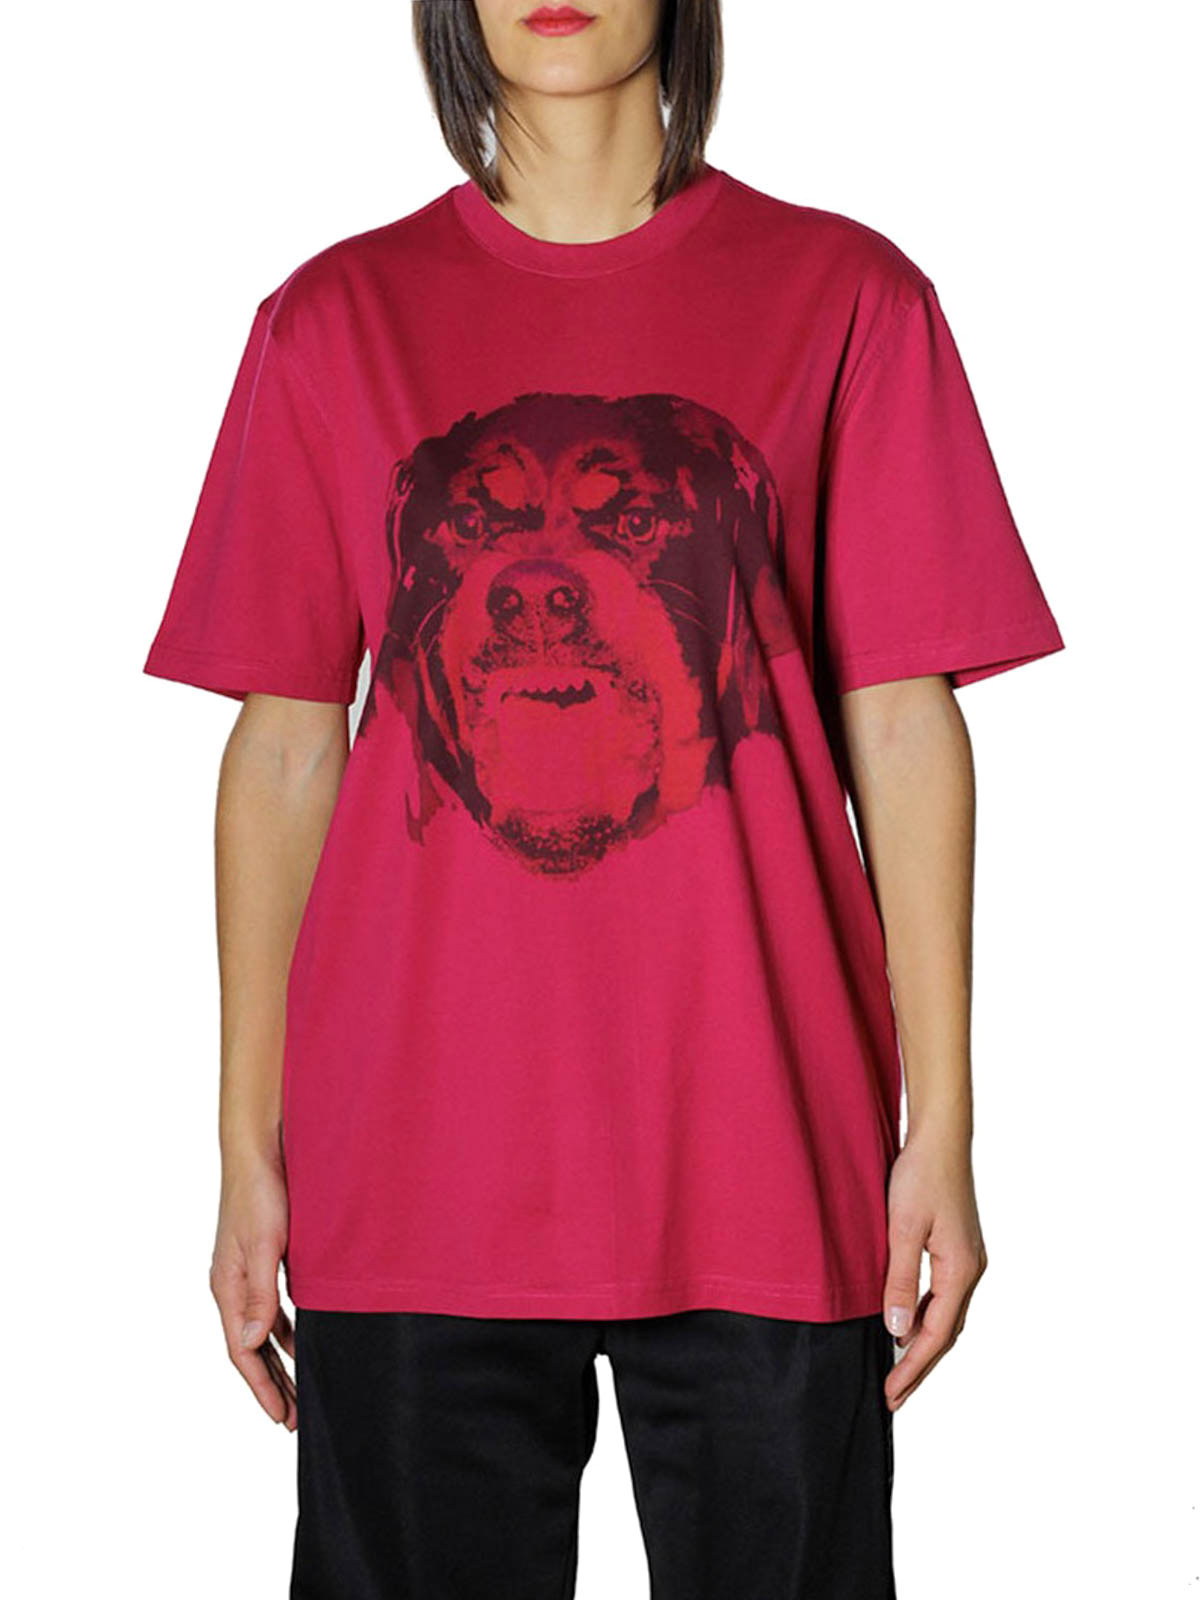 T-shirts Givenchy - Rottweiler print fuchsia T-shirt - BW700D3037675